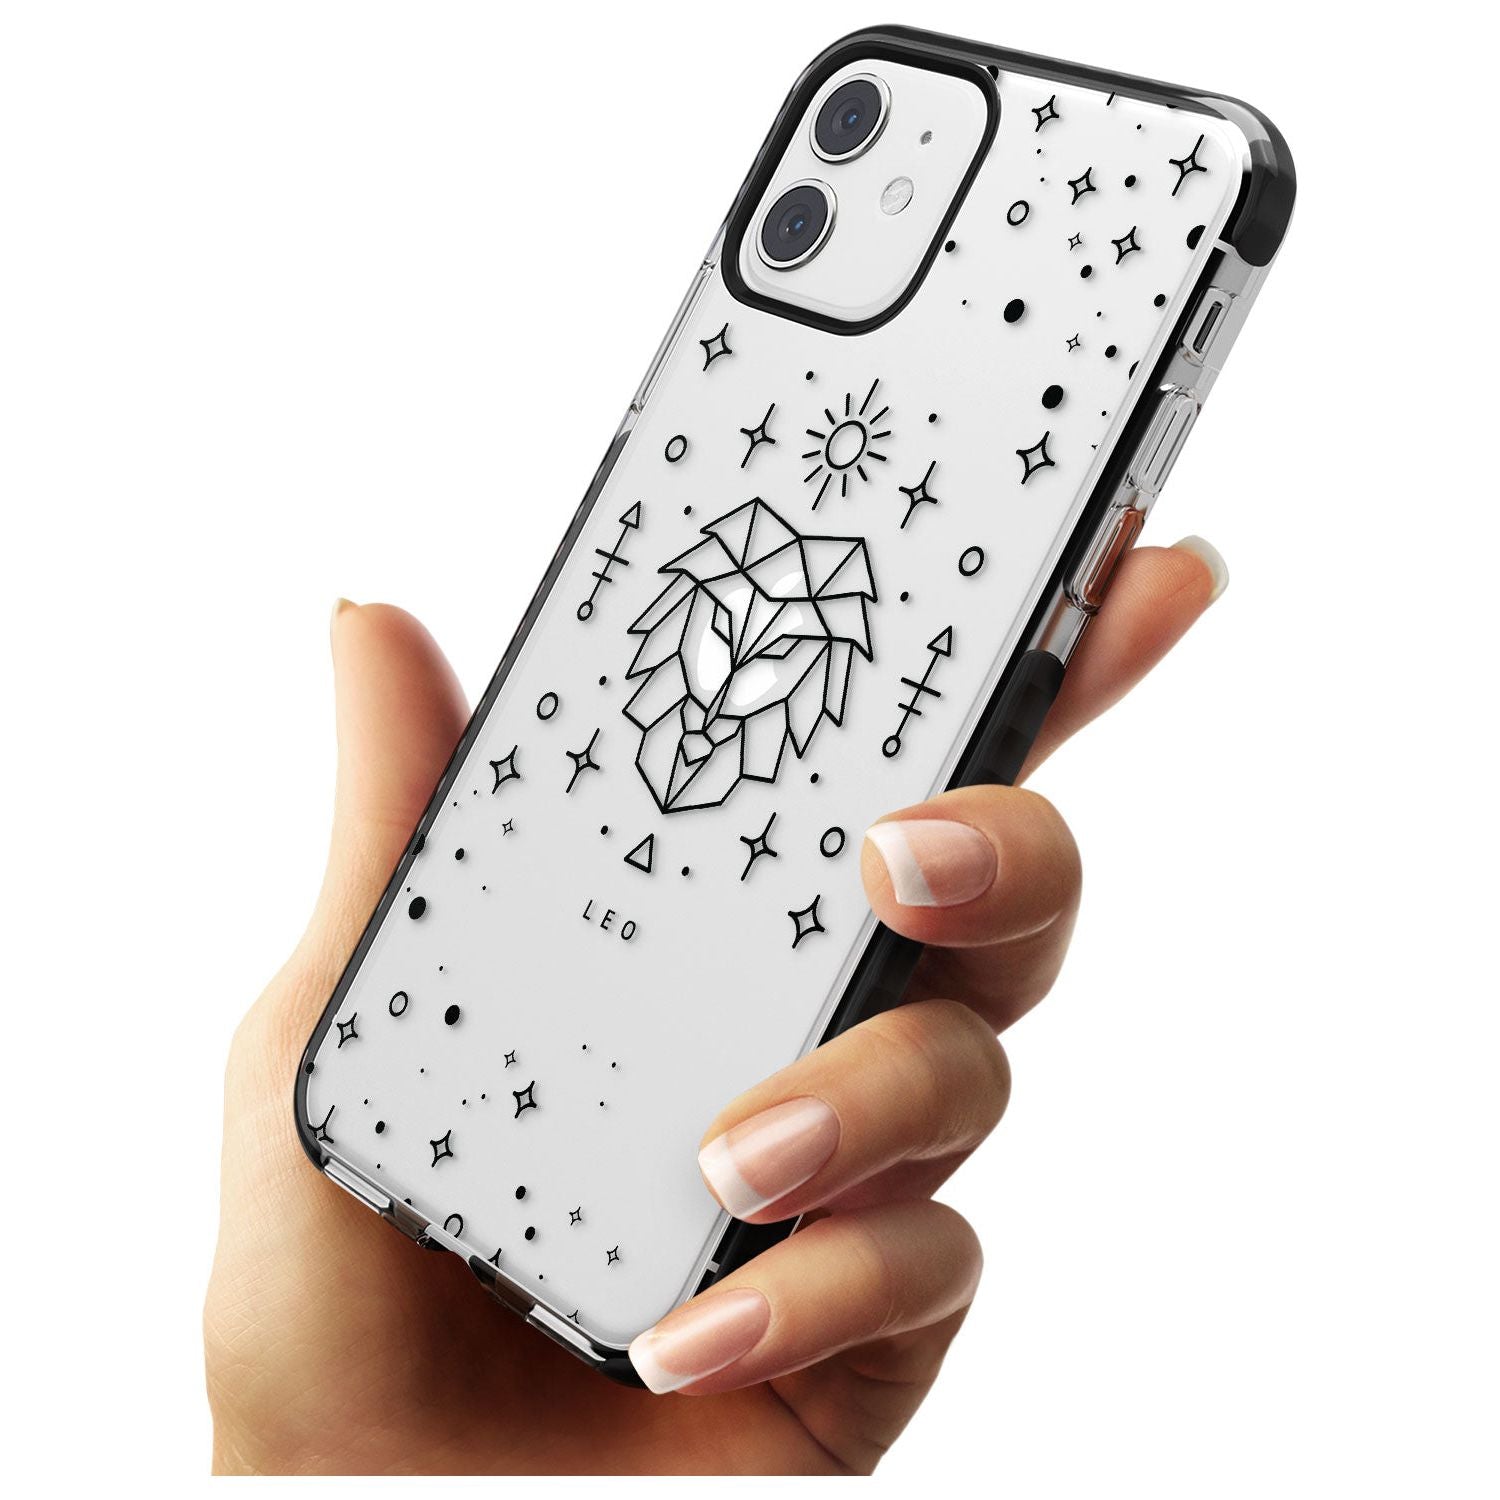 Leo Emblem - Transparent Design Black Impact Phone Case for iPhone 11